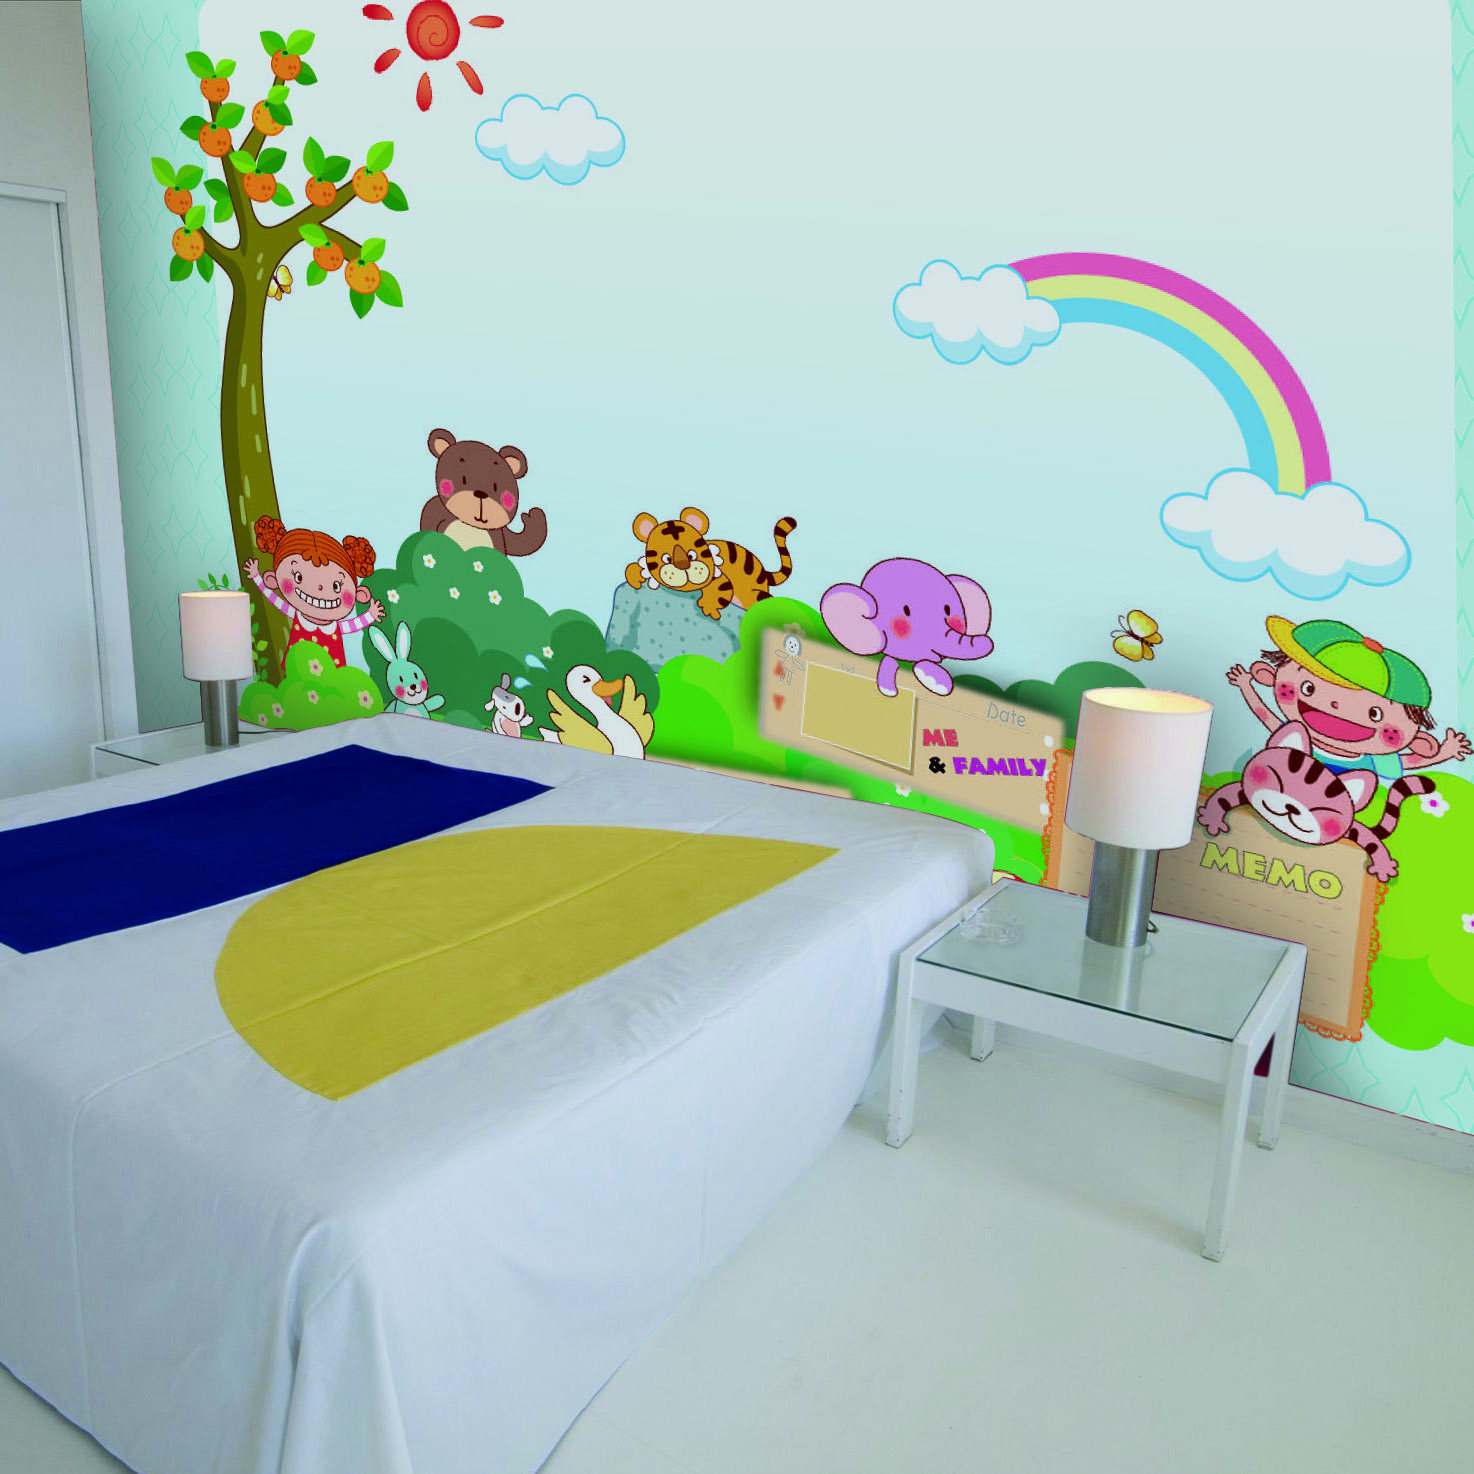 Kids-Wall-Murals-For-Living-Room-Design-Home-Decoration-25-.jpg